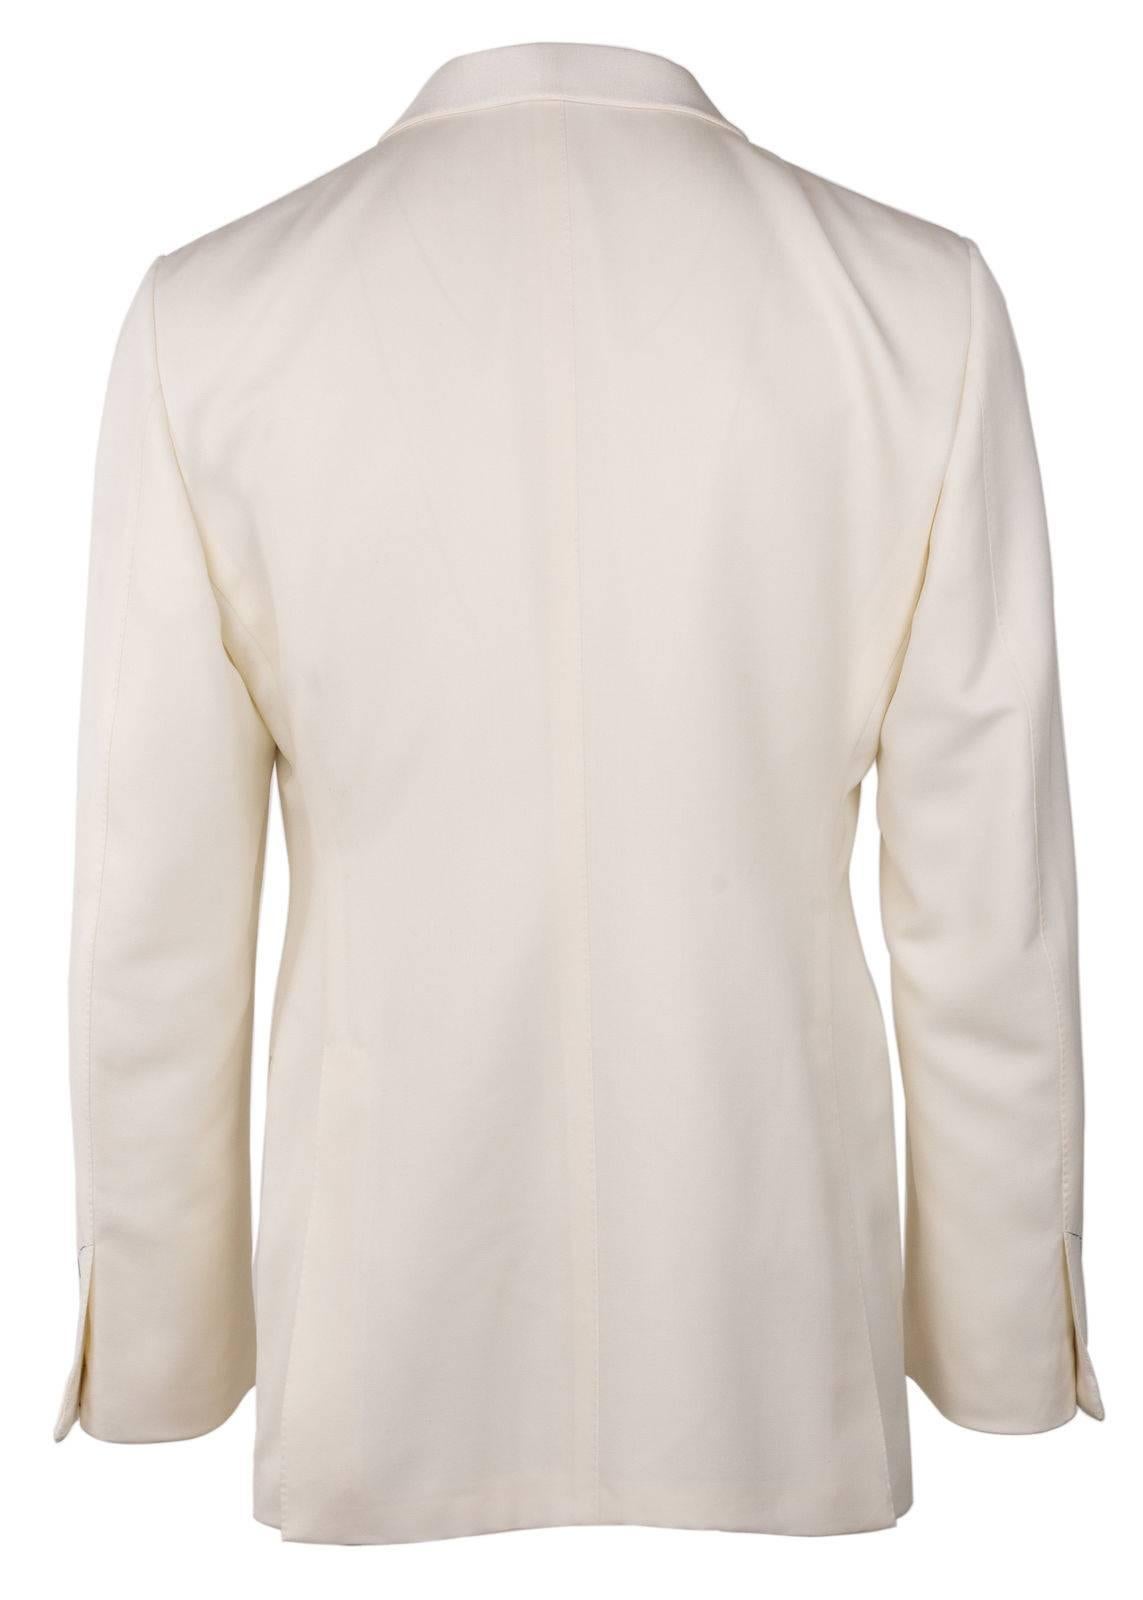 Women's or Men's Tom Ford Ivory Wool Blend Shawl Lapel OConner Cocktail Jacket Sz 50/40R RTL$4250